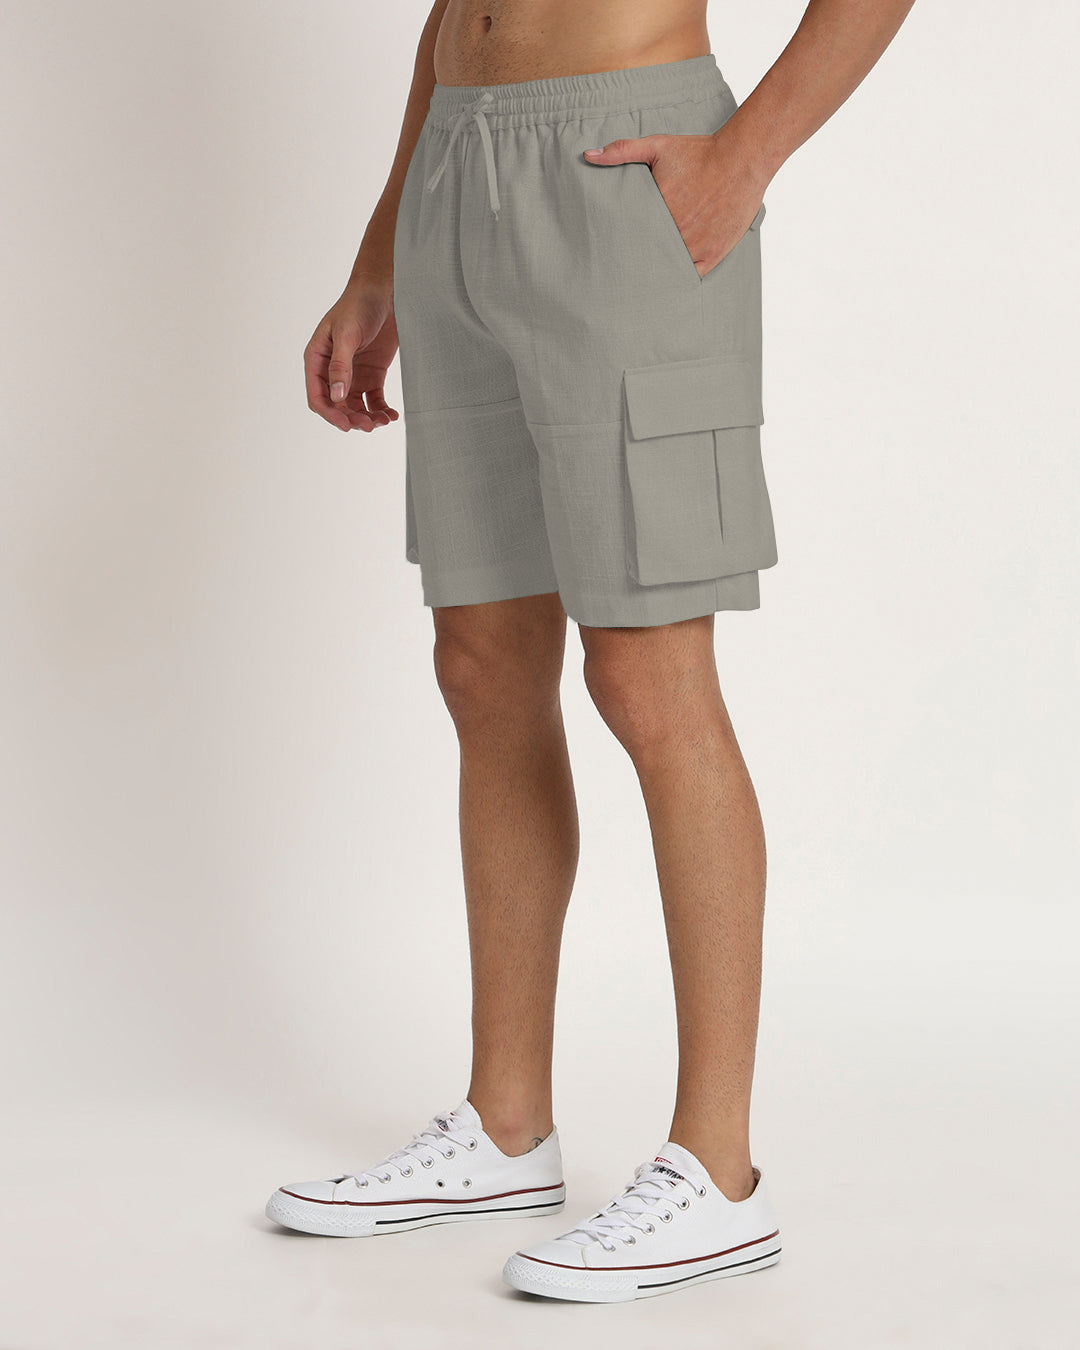 Combo : Comfy Ease & Cargo Grey Men's Pants & Shorts  - Set of 2